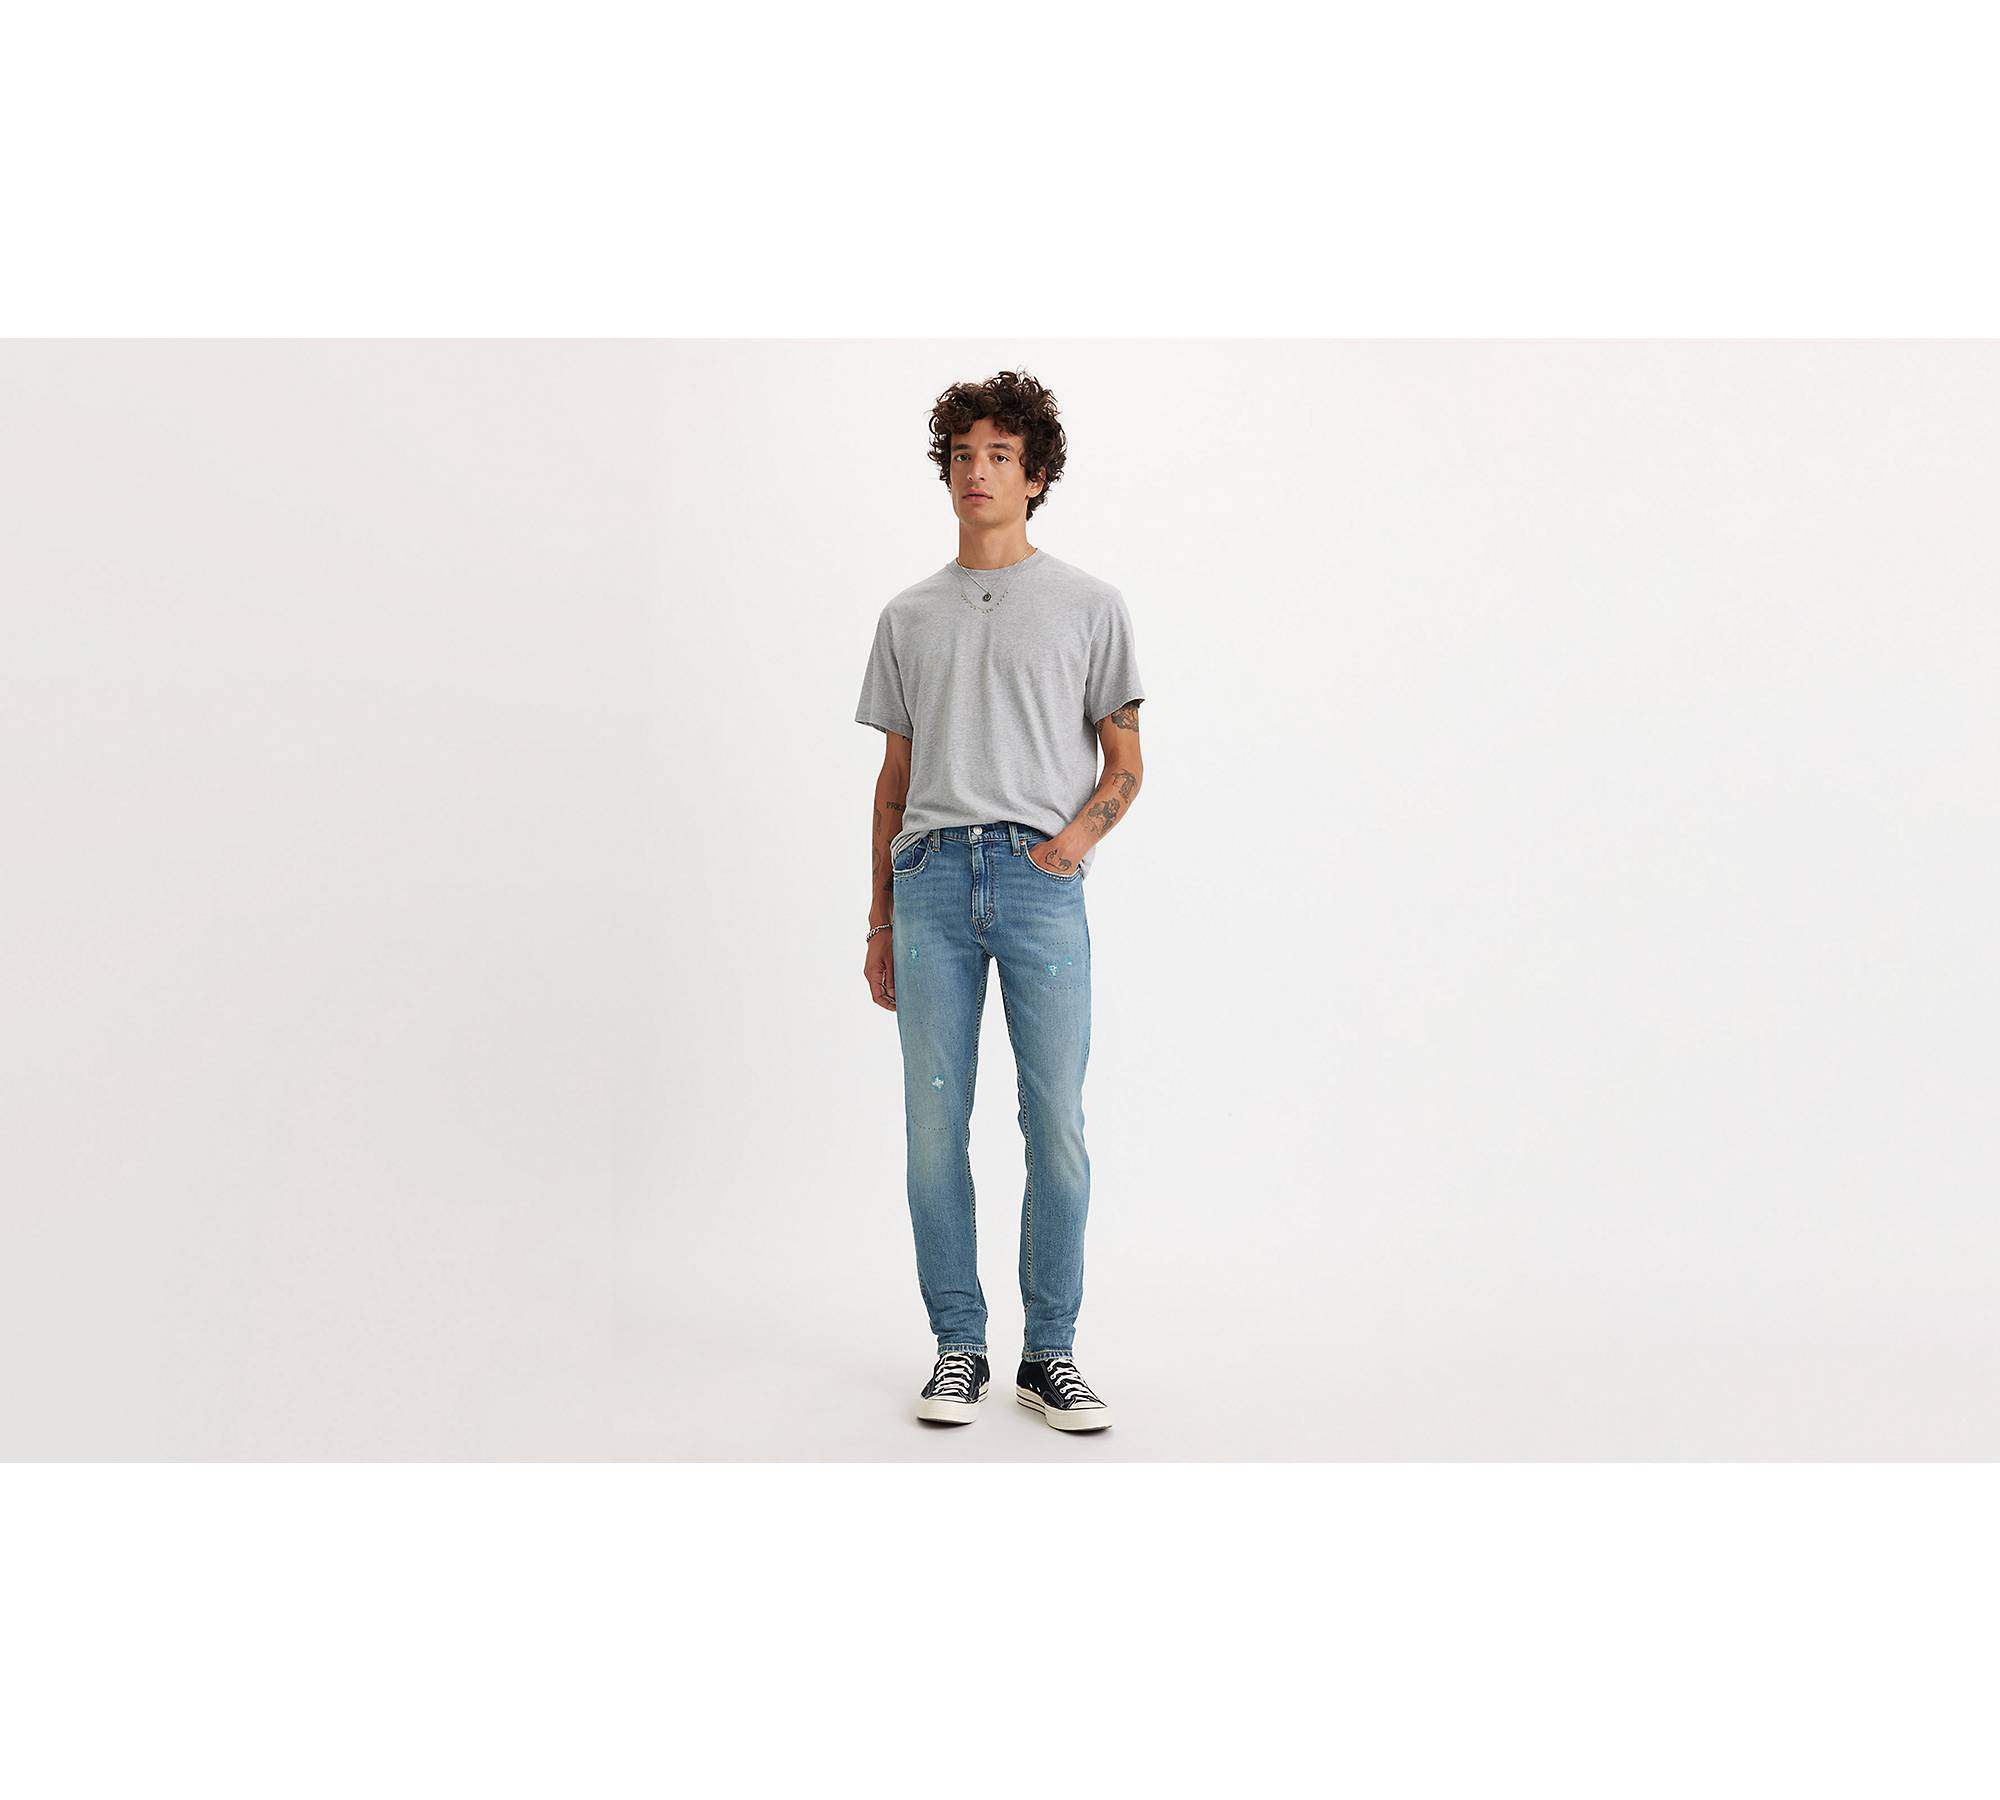 Levis: 512 Slim Taper Jeans